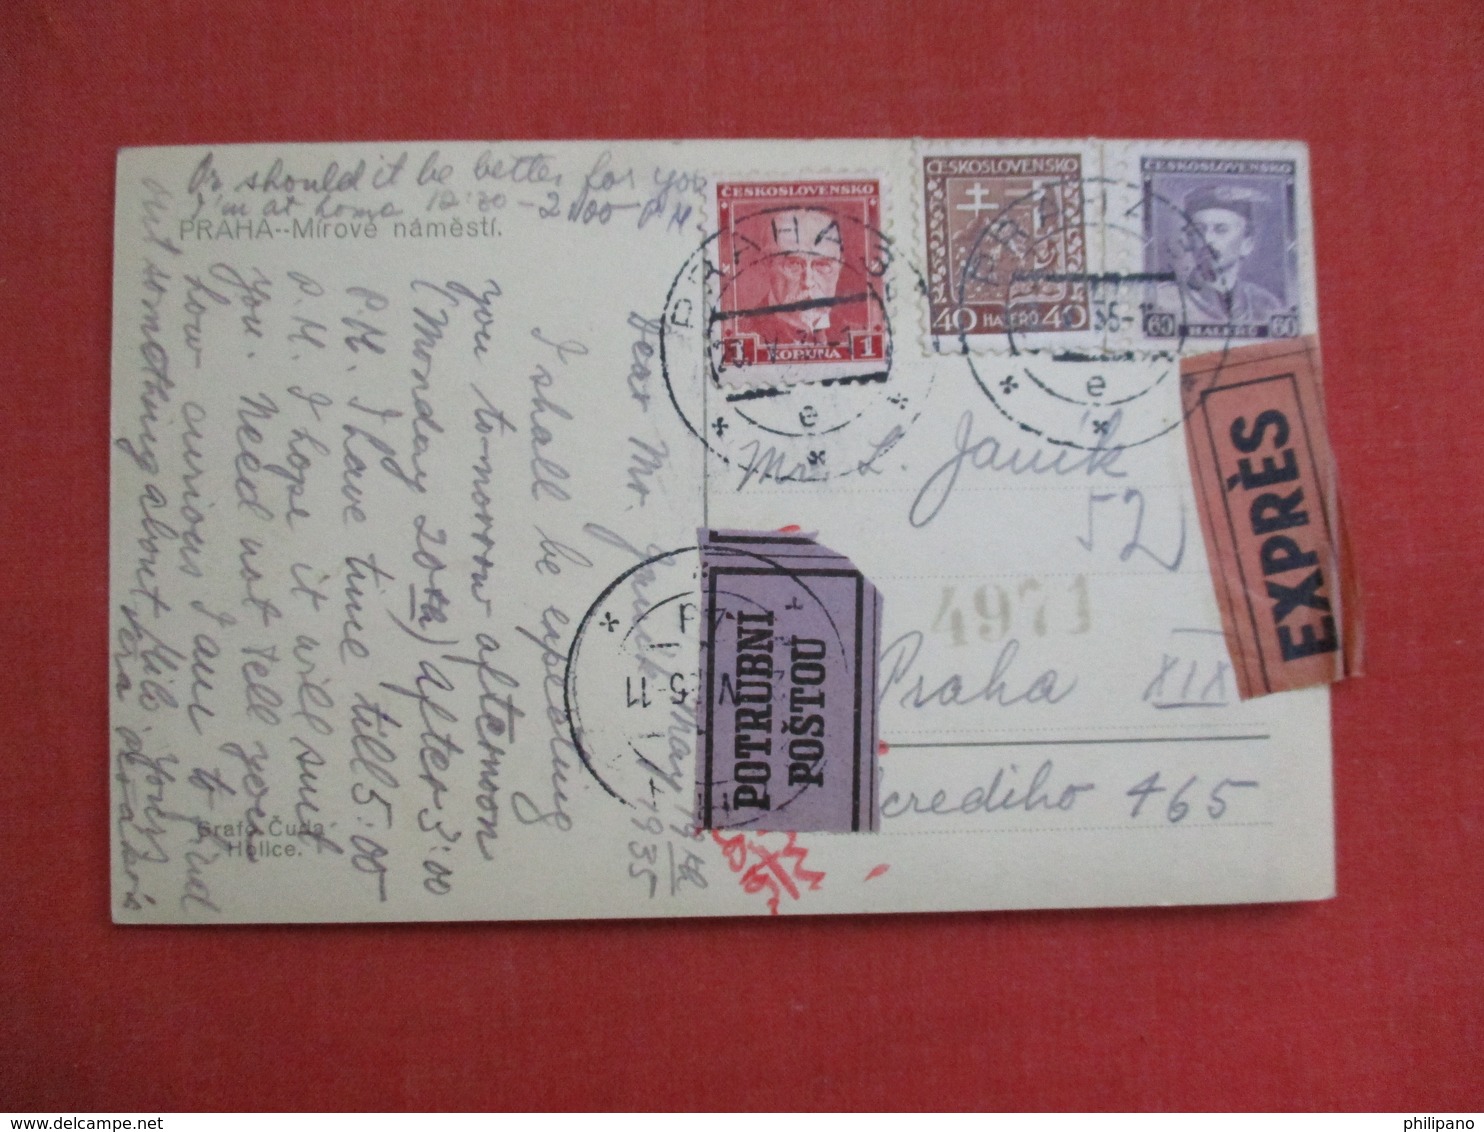 RPPC Cukrarna Kavarna Sterba-- Praha Mirove Namestf- Express Mail 3 Stamps Czech Republic  Ref 3087 - Repubblica Ceca